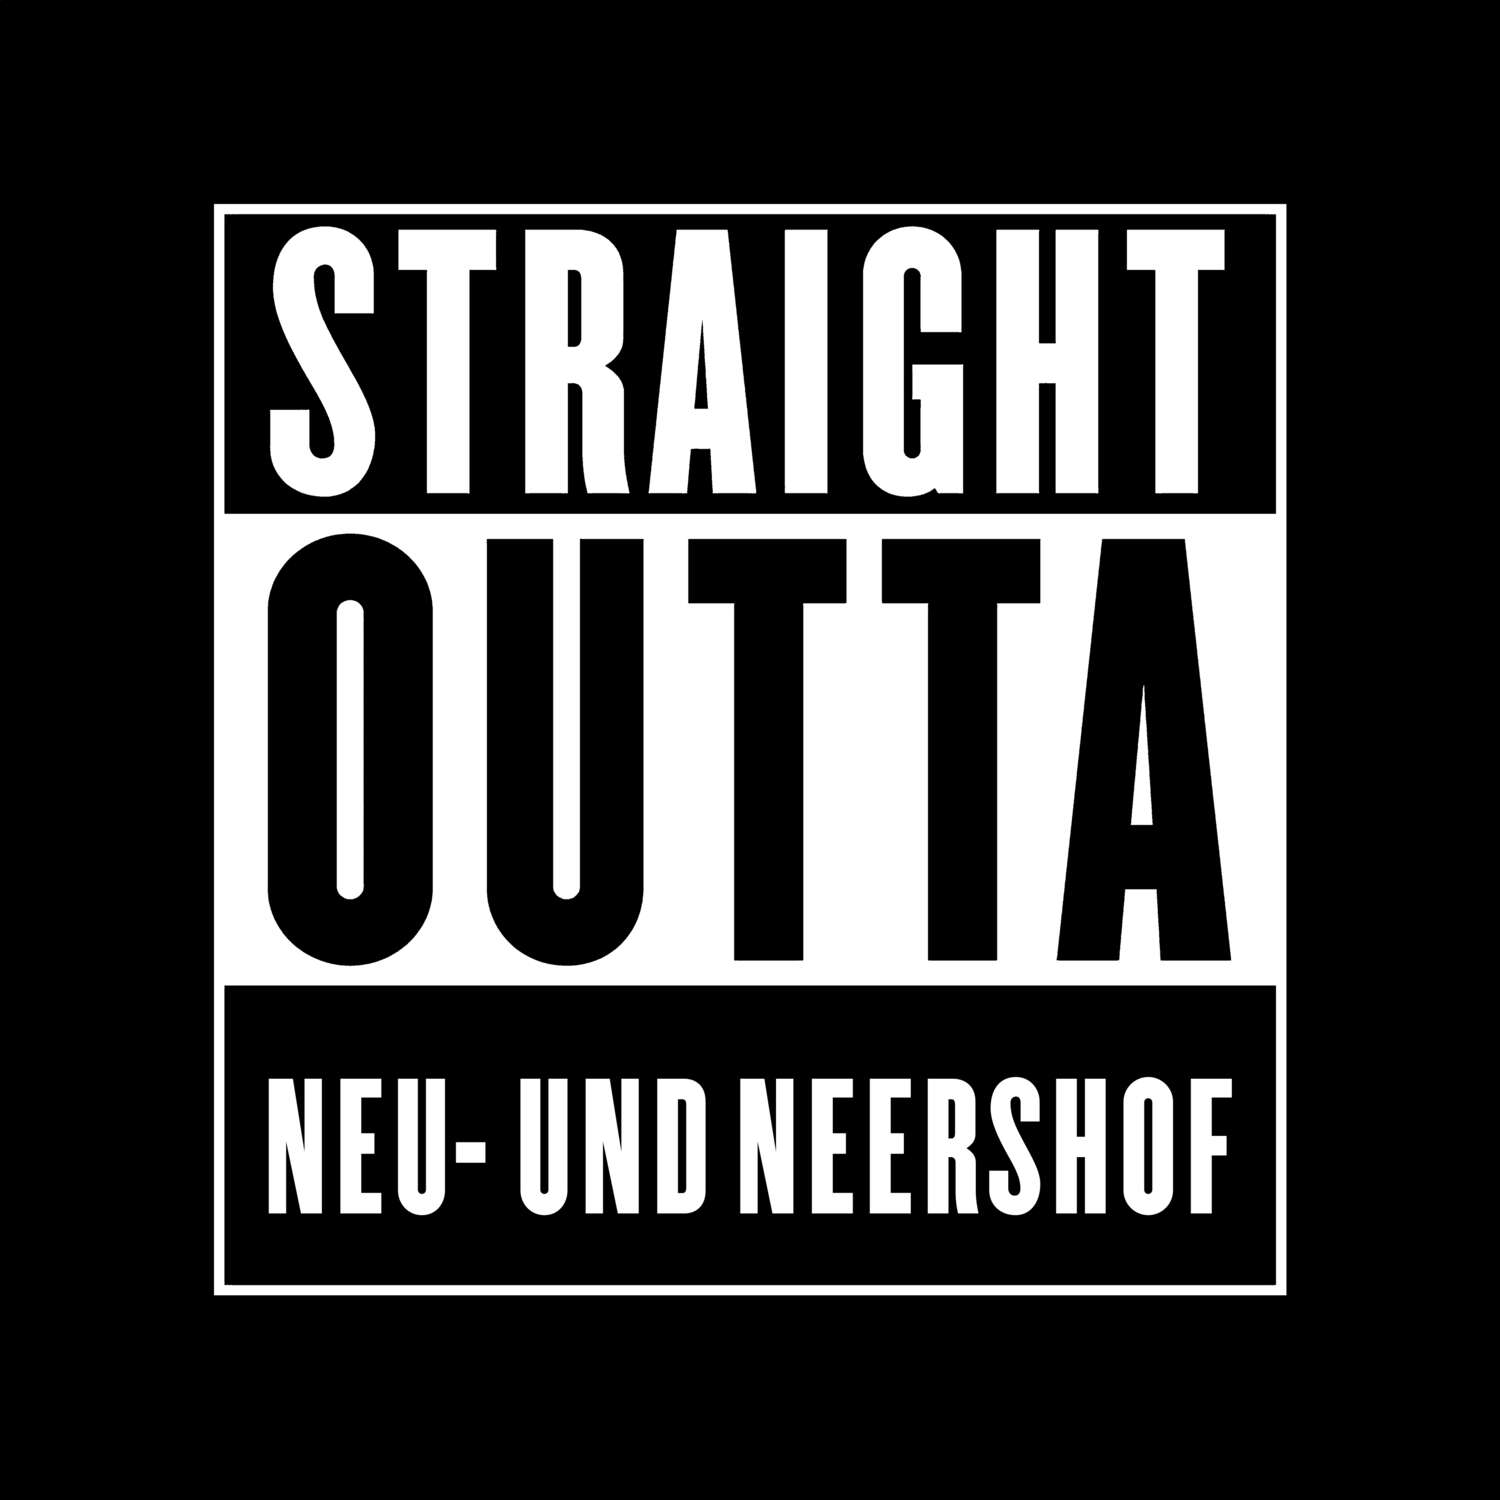 Neu- und Neershof T-Shirt »Straight Outta«